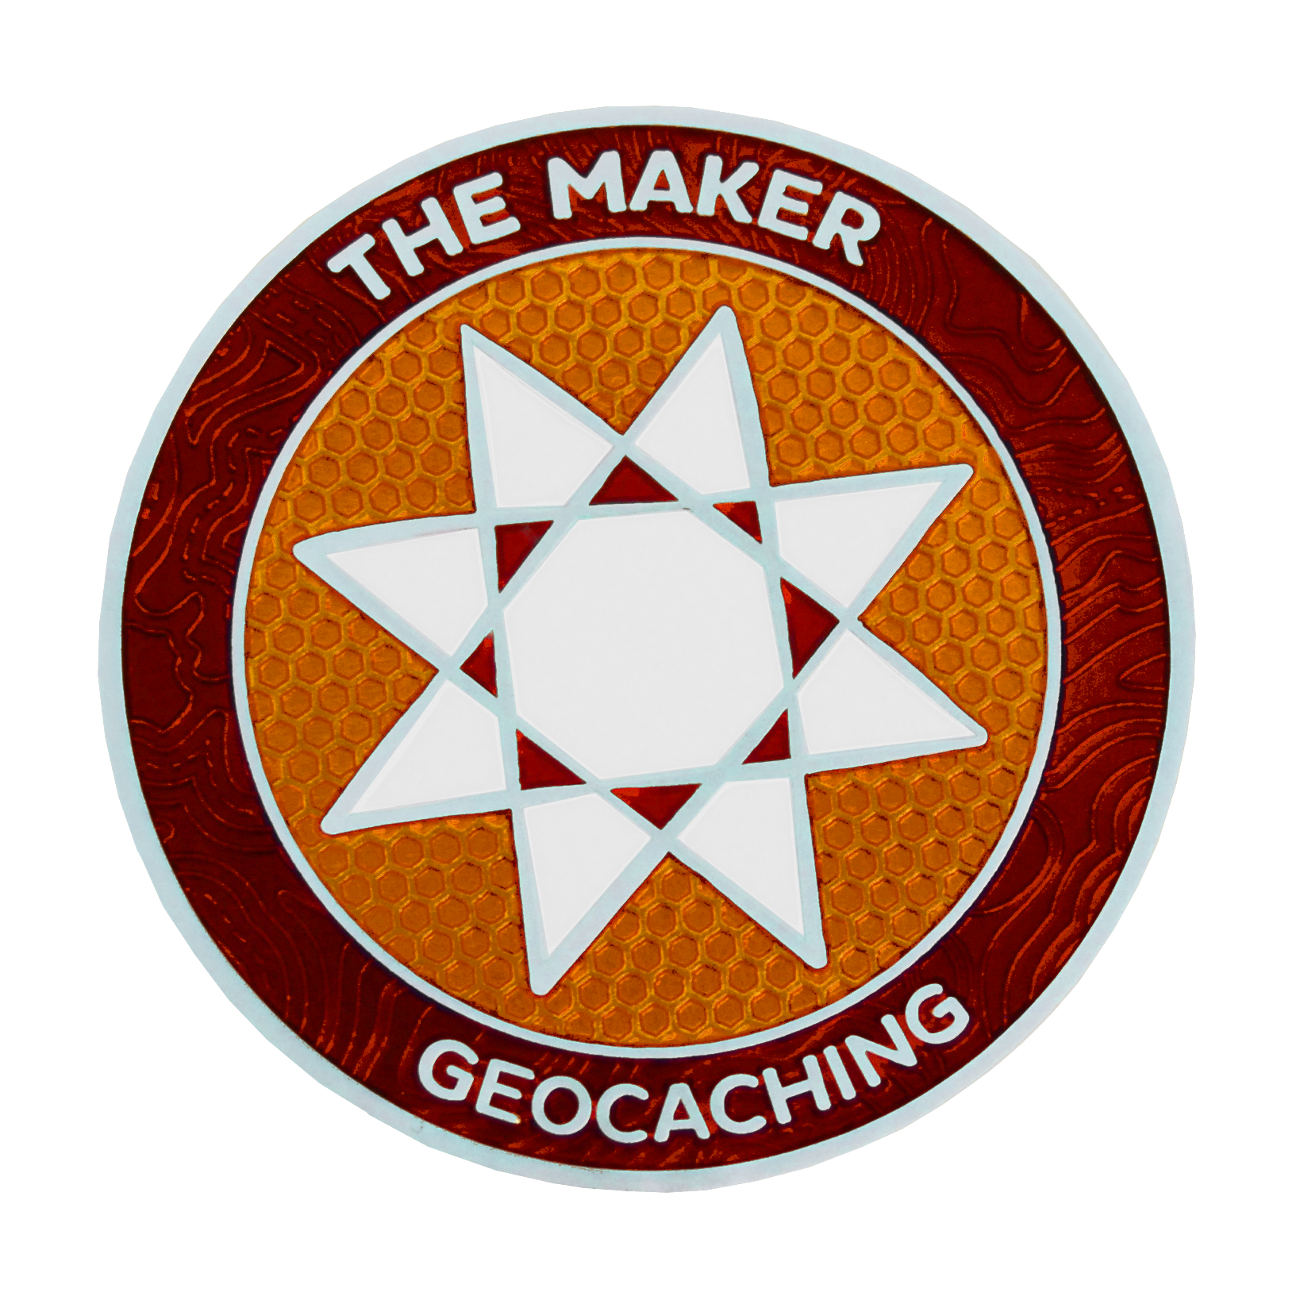 "Maker Madness", Geocoin